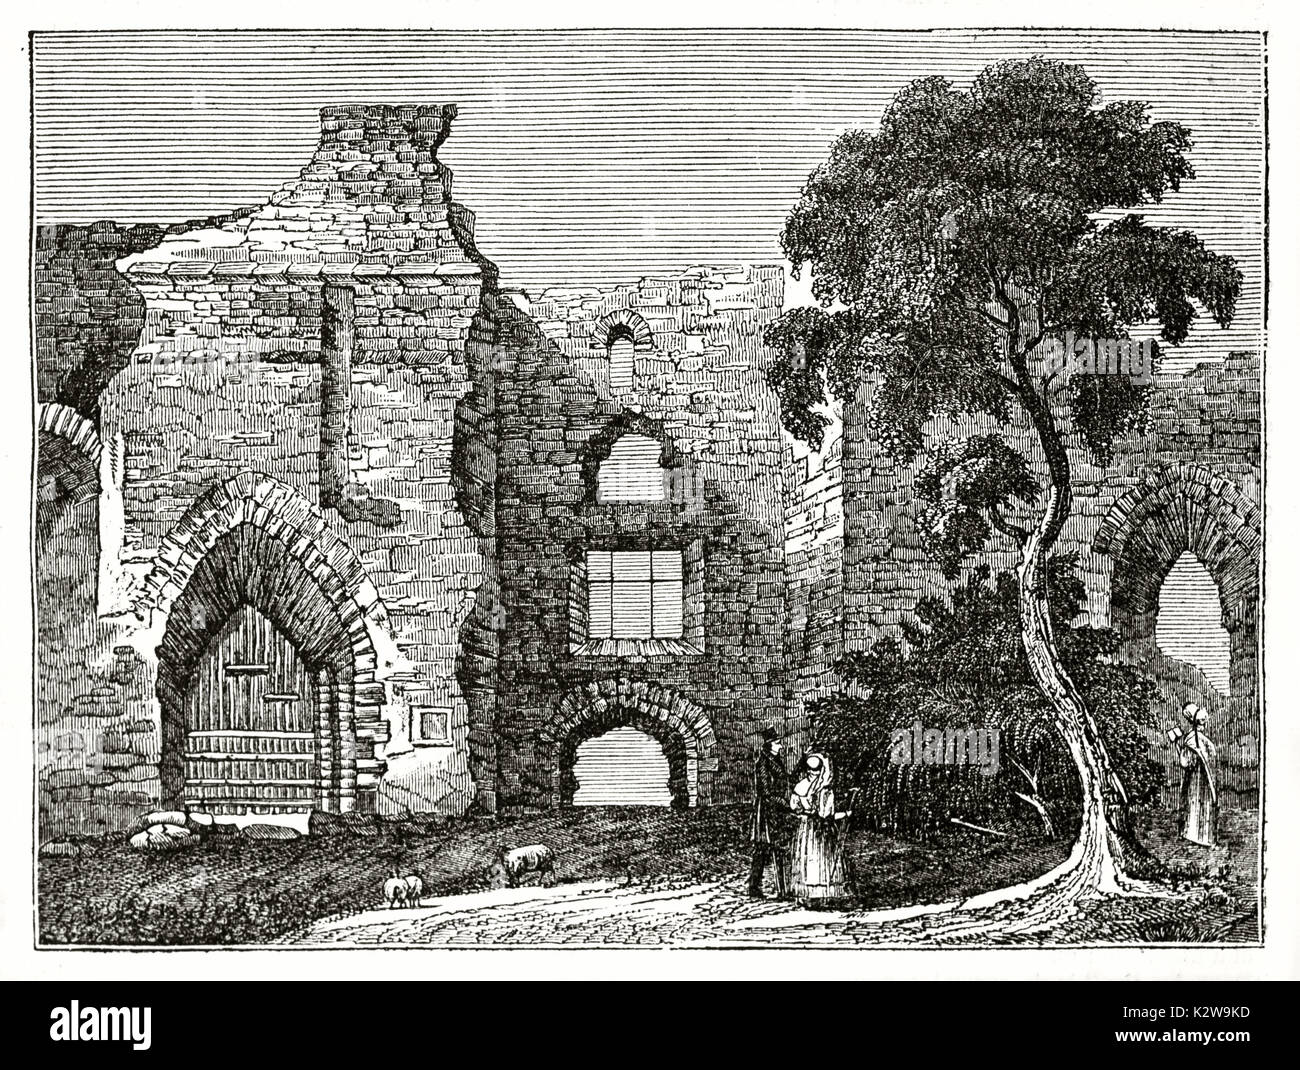 Old illustration of Newark castle ruins, England. By unidentified author, published on the Penny Magazine, London, 1835 Stock Photo